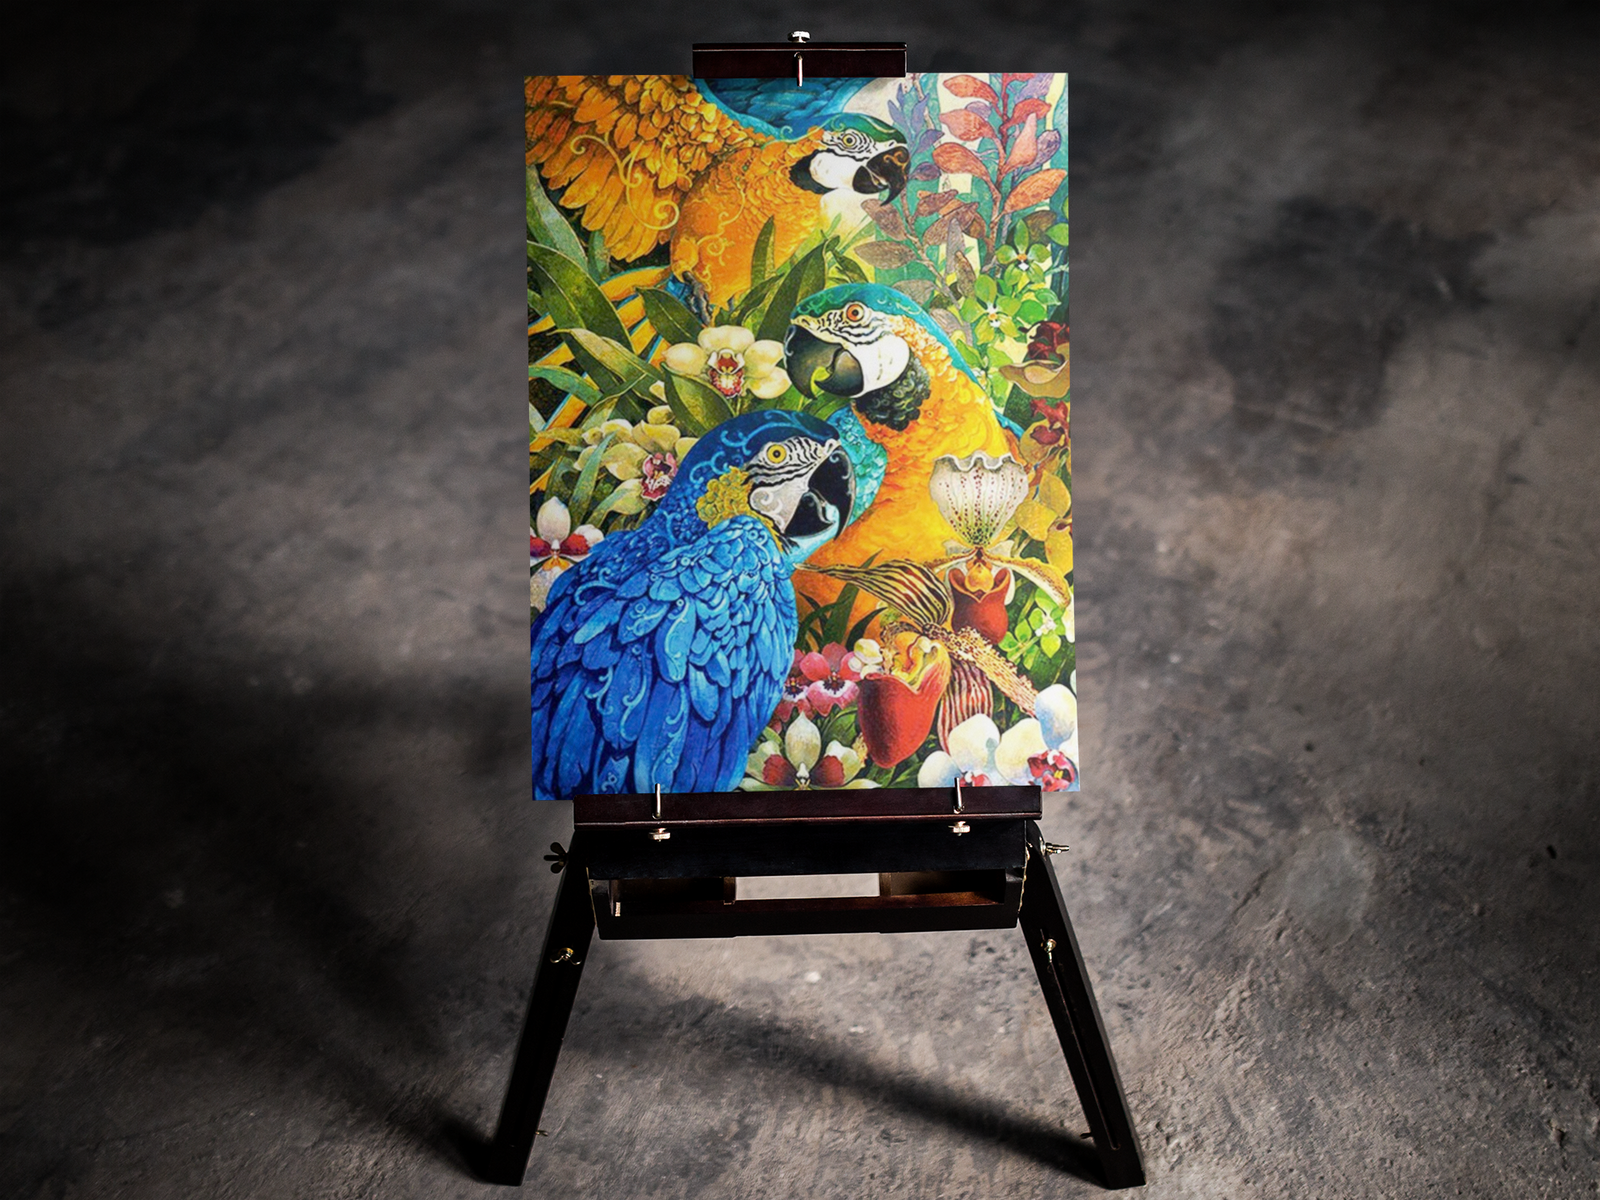 Mosaic Parrot Trio 5D Diamond Art Kit